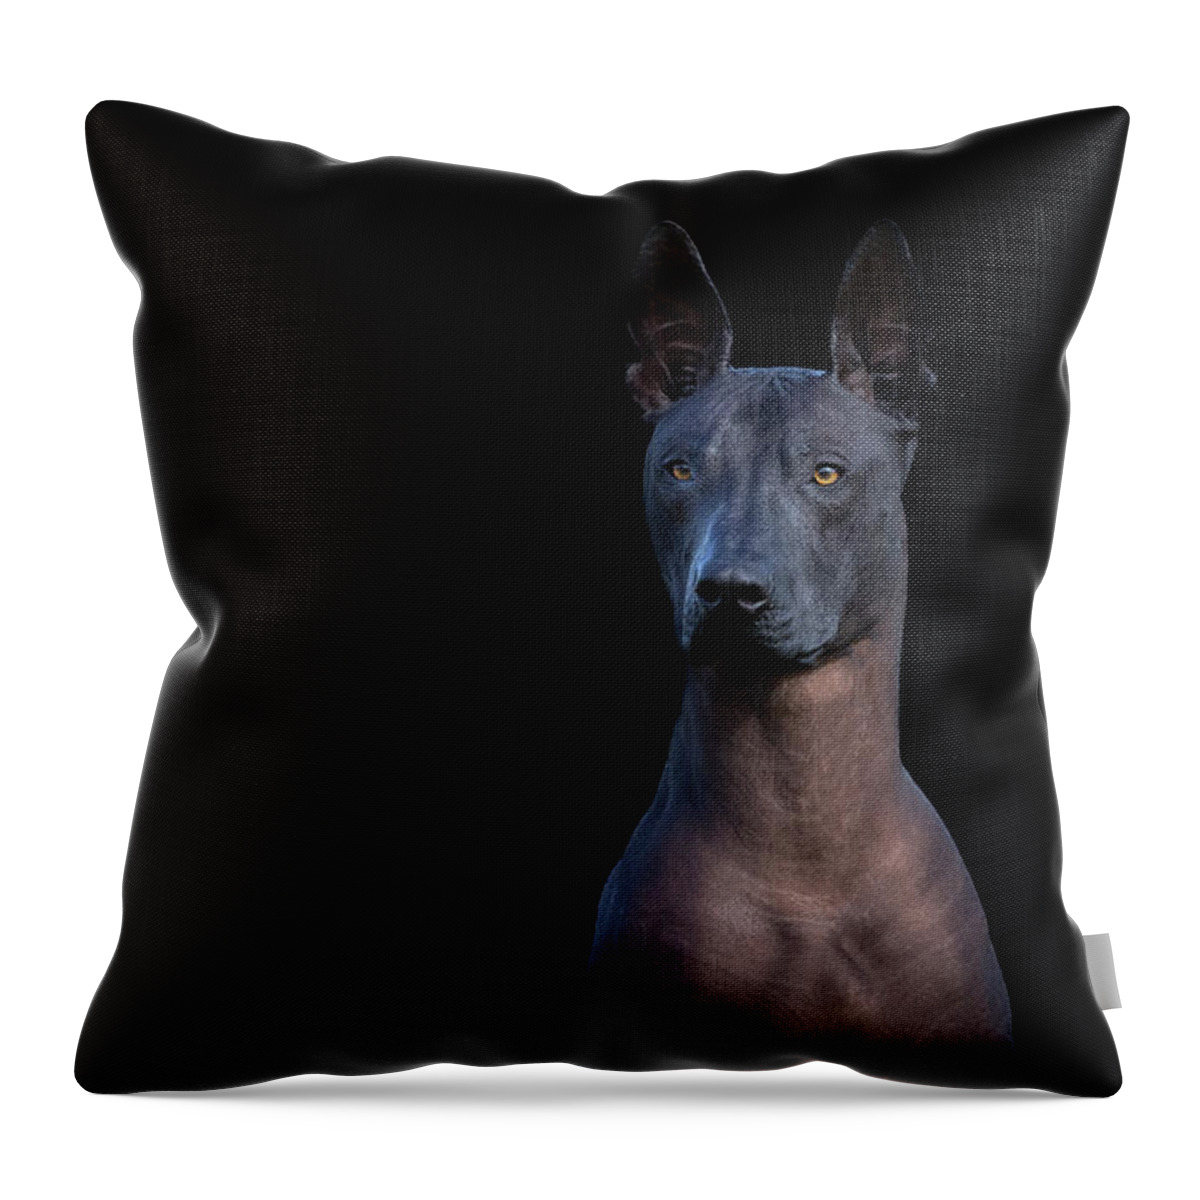 Xoloitzcuintli Throw Pillow featuring the photograph Xoloitzcuintle Portrait by Diana Andersen